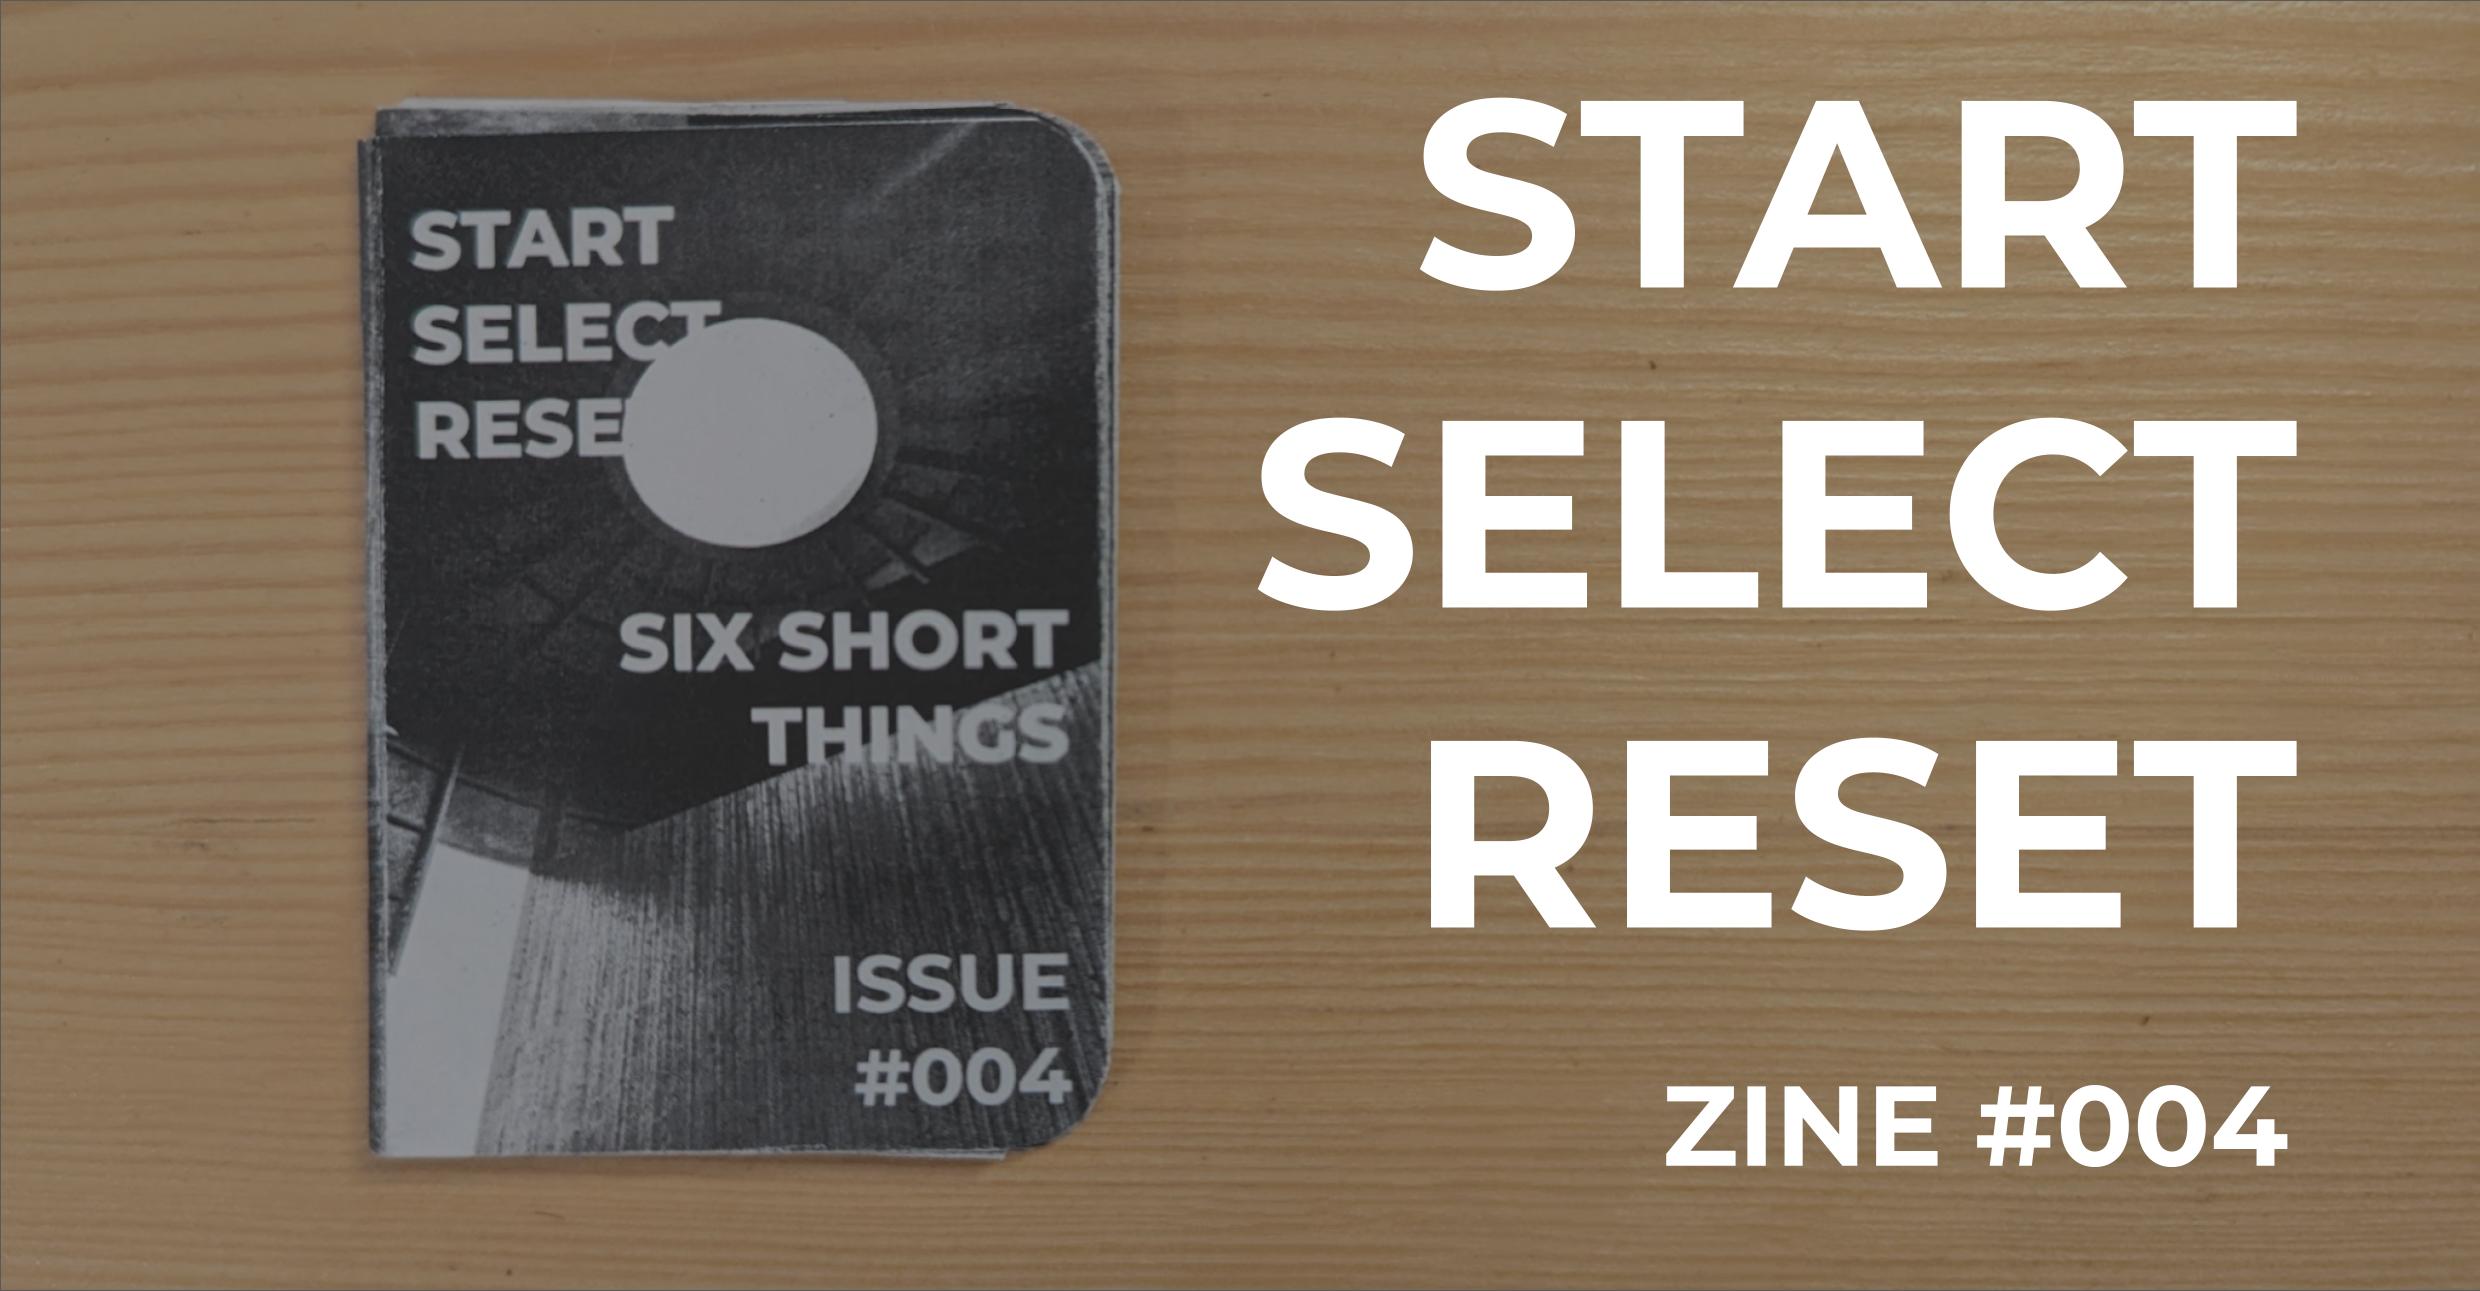 Start Select Reset Zine – Six Short Things